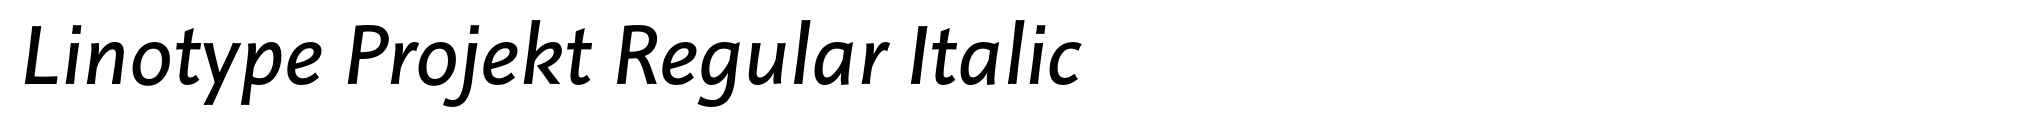 Linotype Projekt Regular Italic image